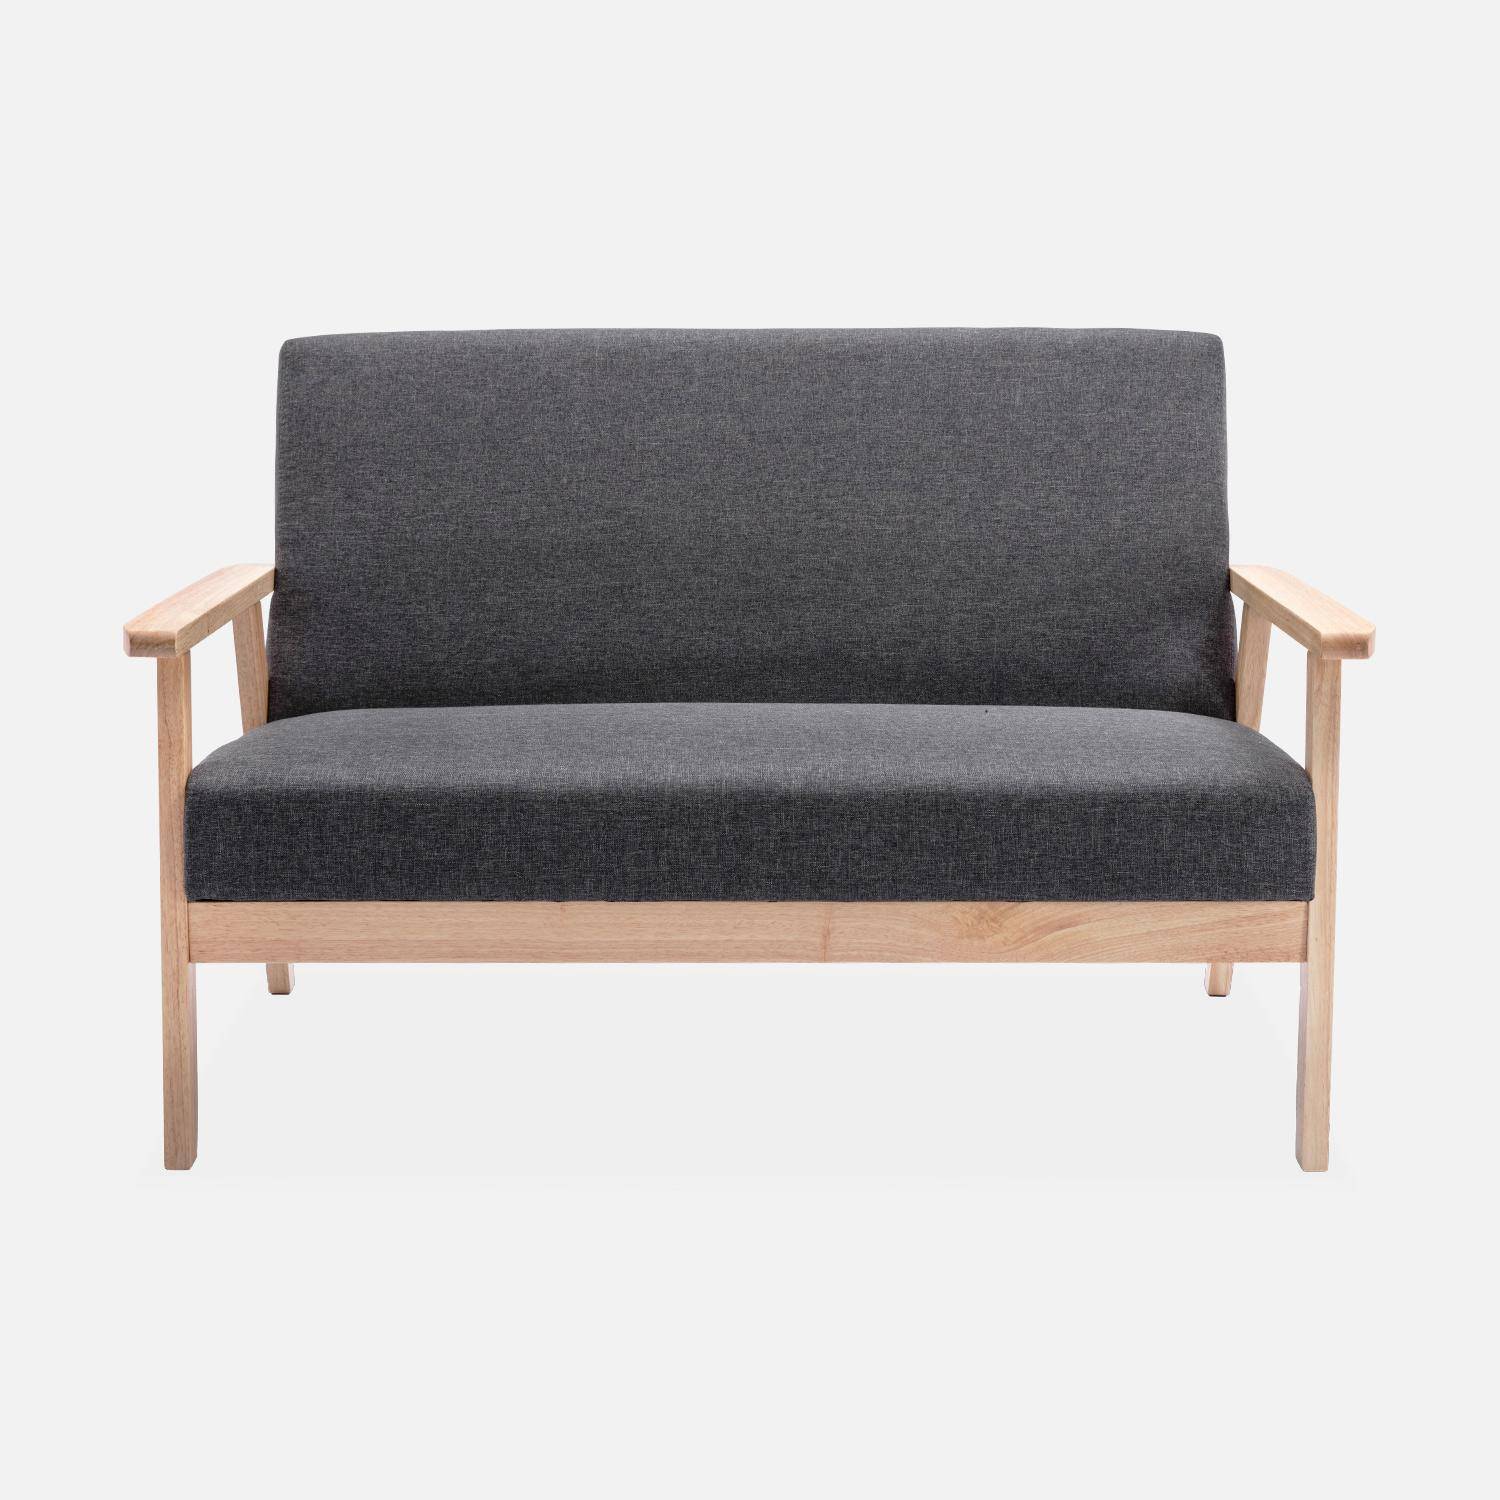 Banco y sillón de madera y tela gris oscuro, Isak, L 114 x A 69,5 x A 73 cm Photo3